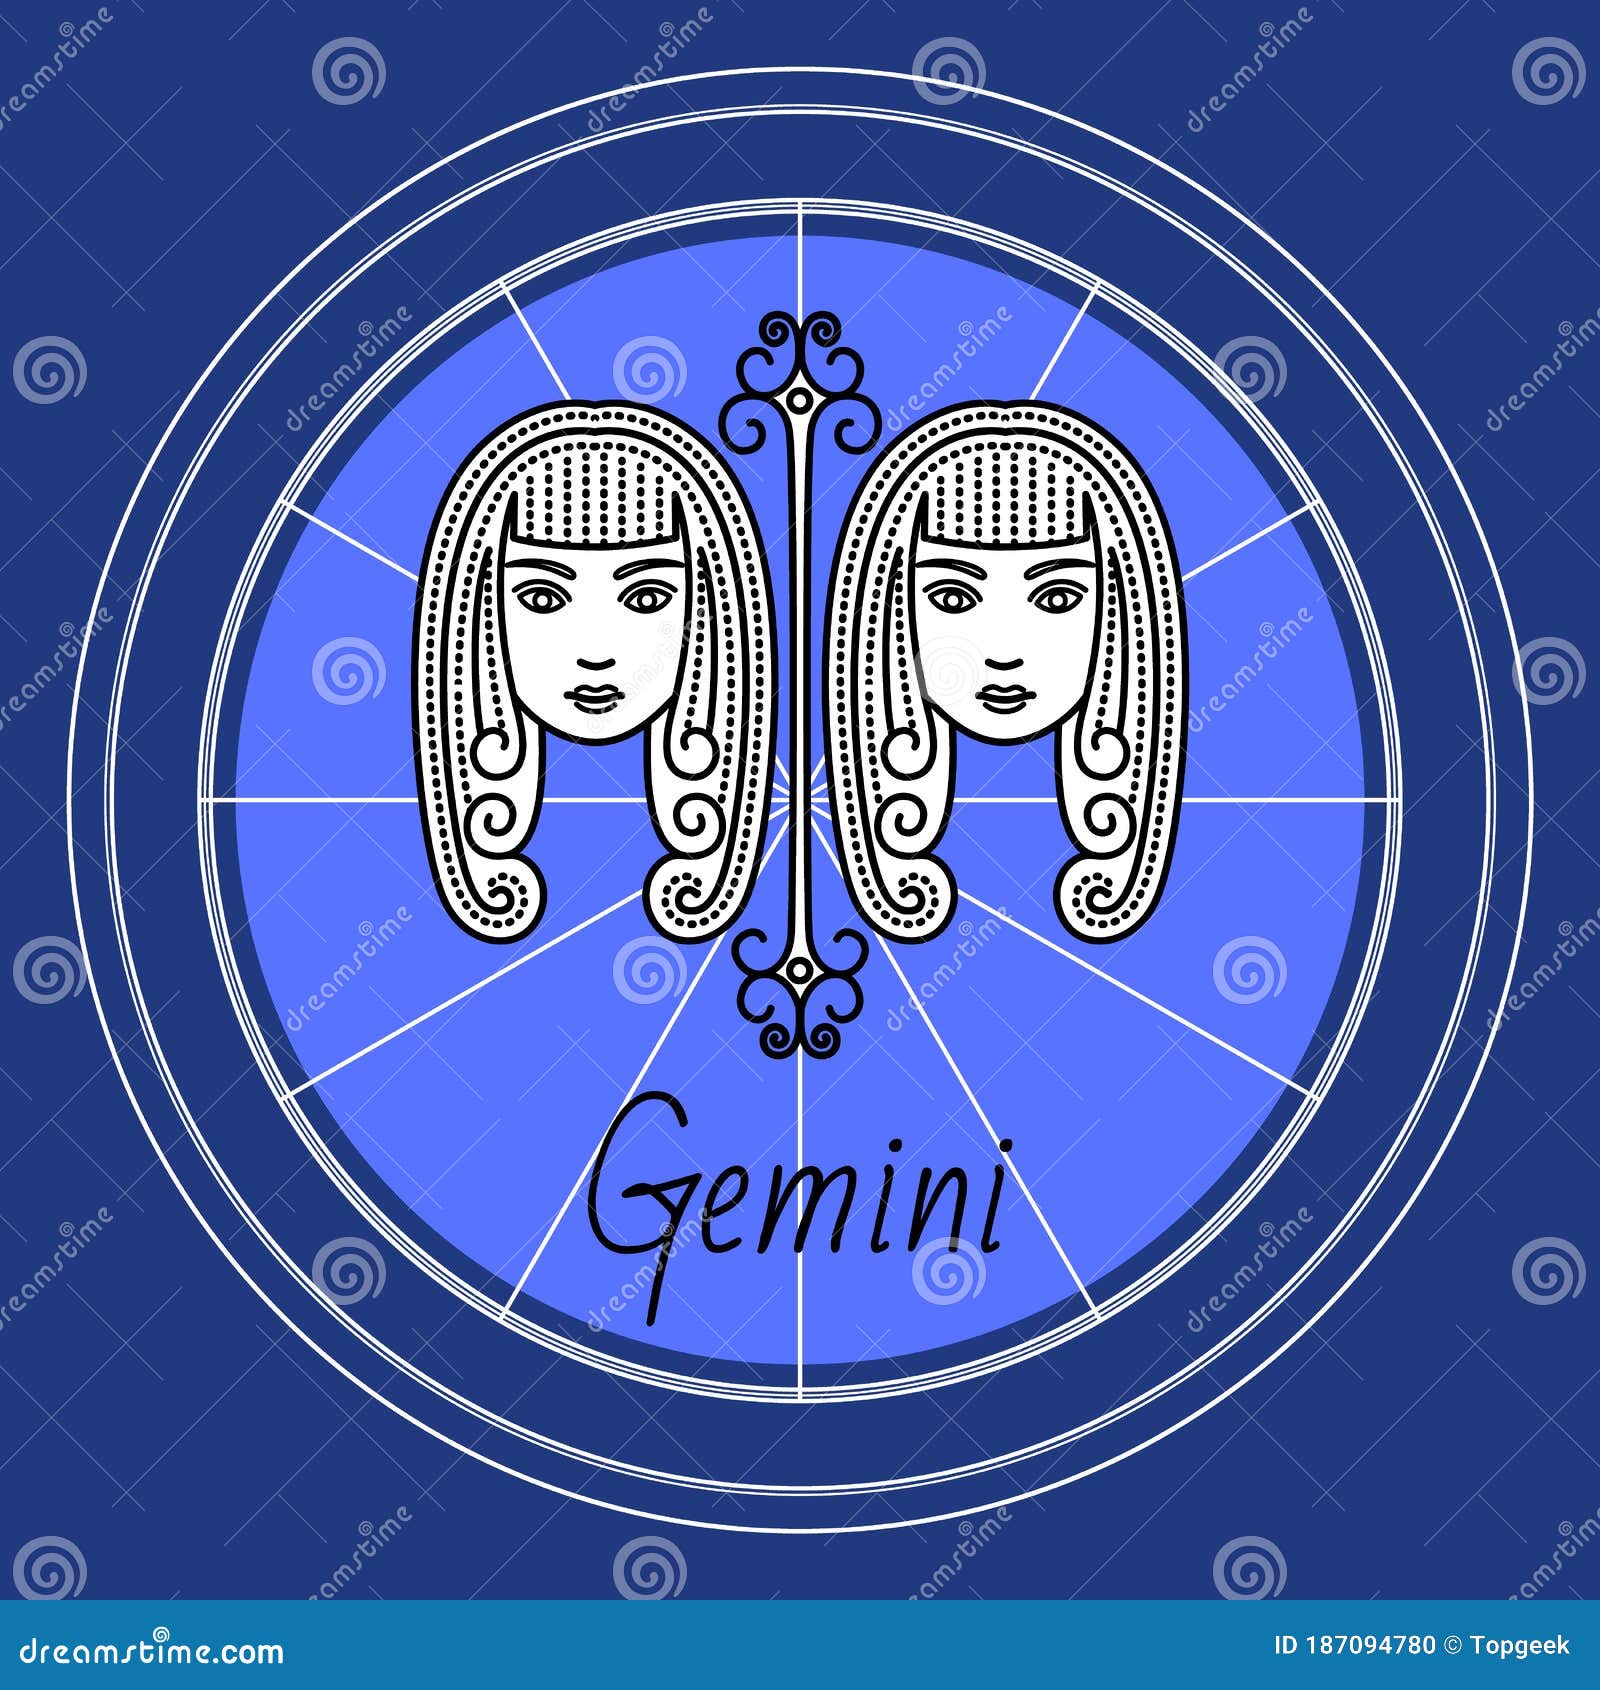 Gemini Zodiac Sign Of Twins Horoscope Astrology Stock Vector